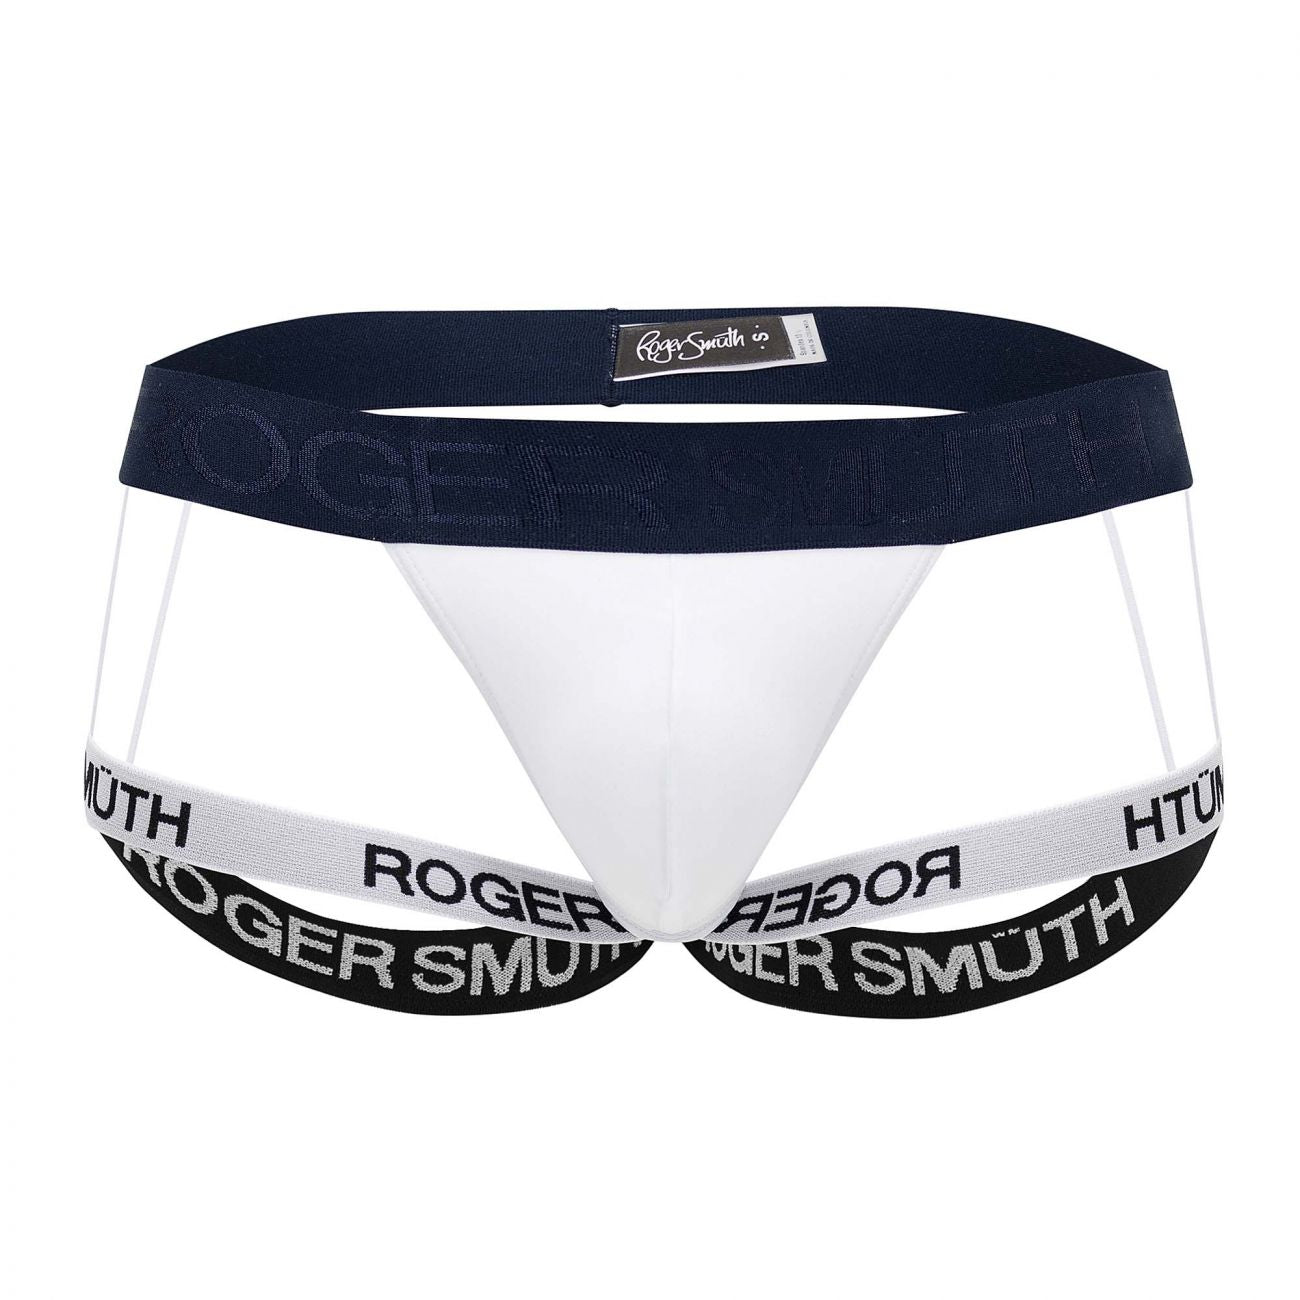 Roger Smuth RS013-1 Jockstrap